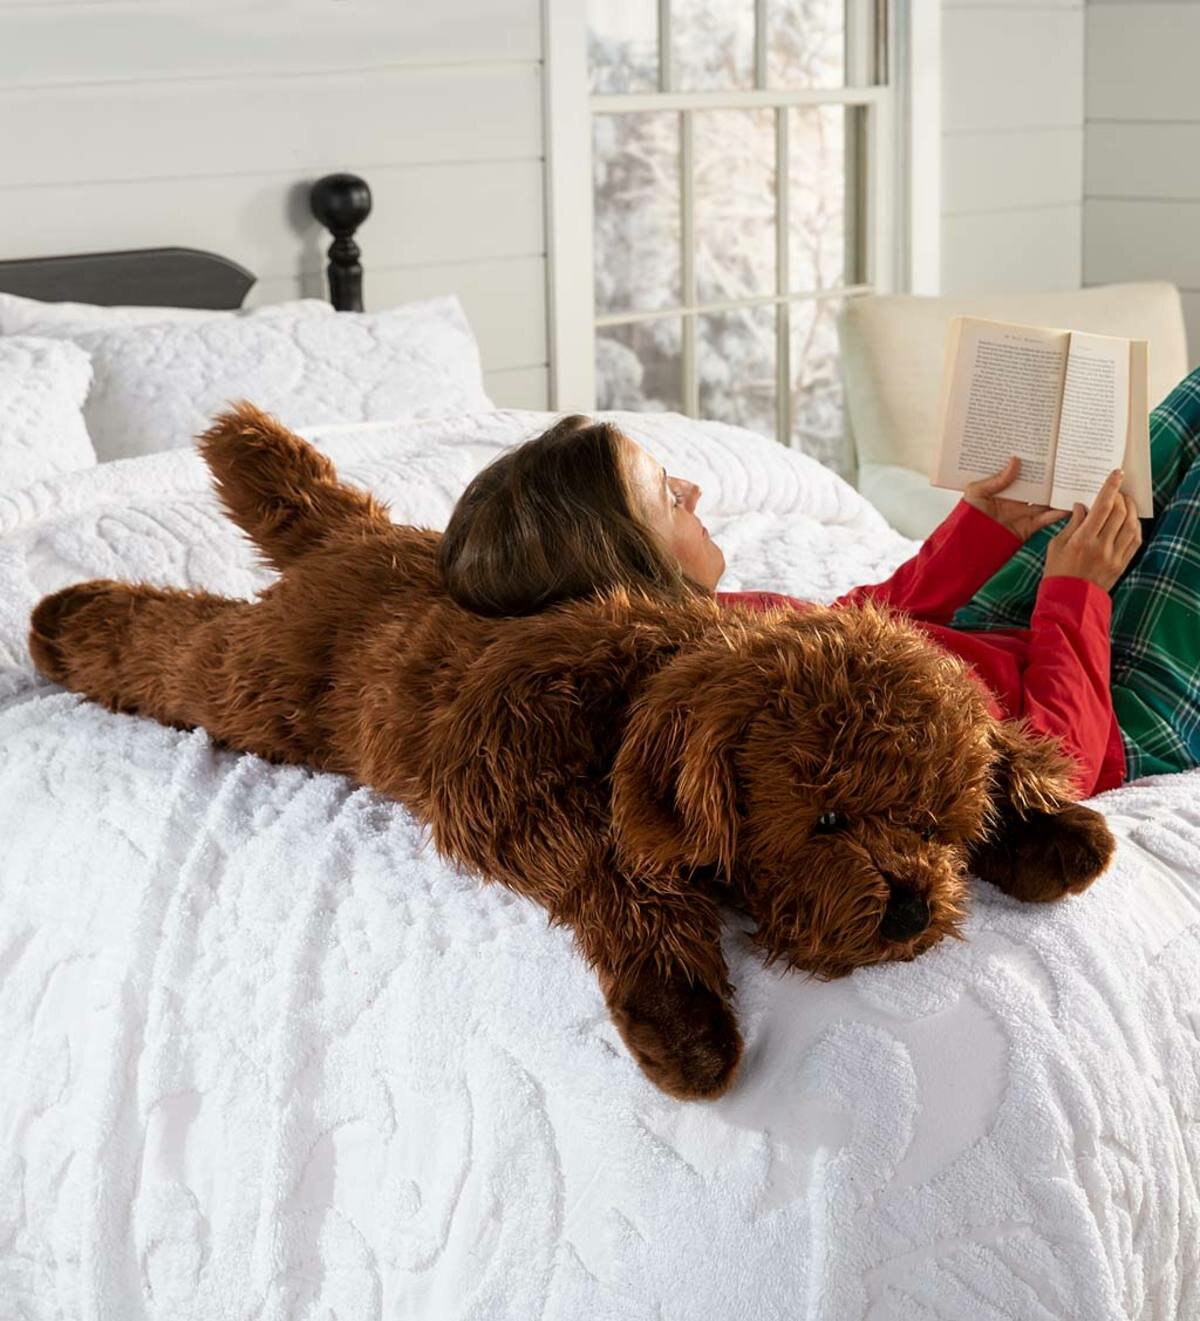 Large Animal Plush Toys : Polar Bear Oversized Plush Cuddle Animal Body  Pillow